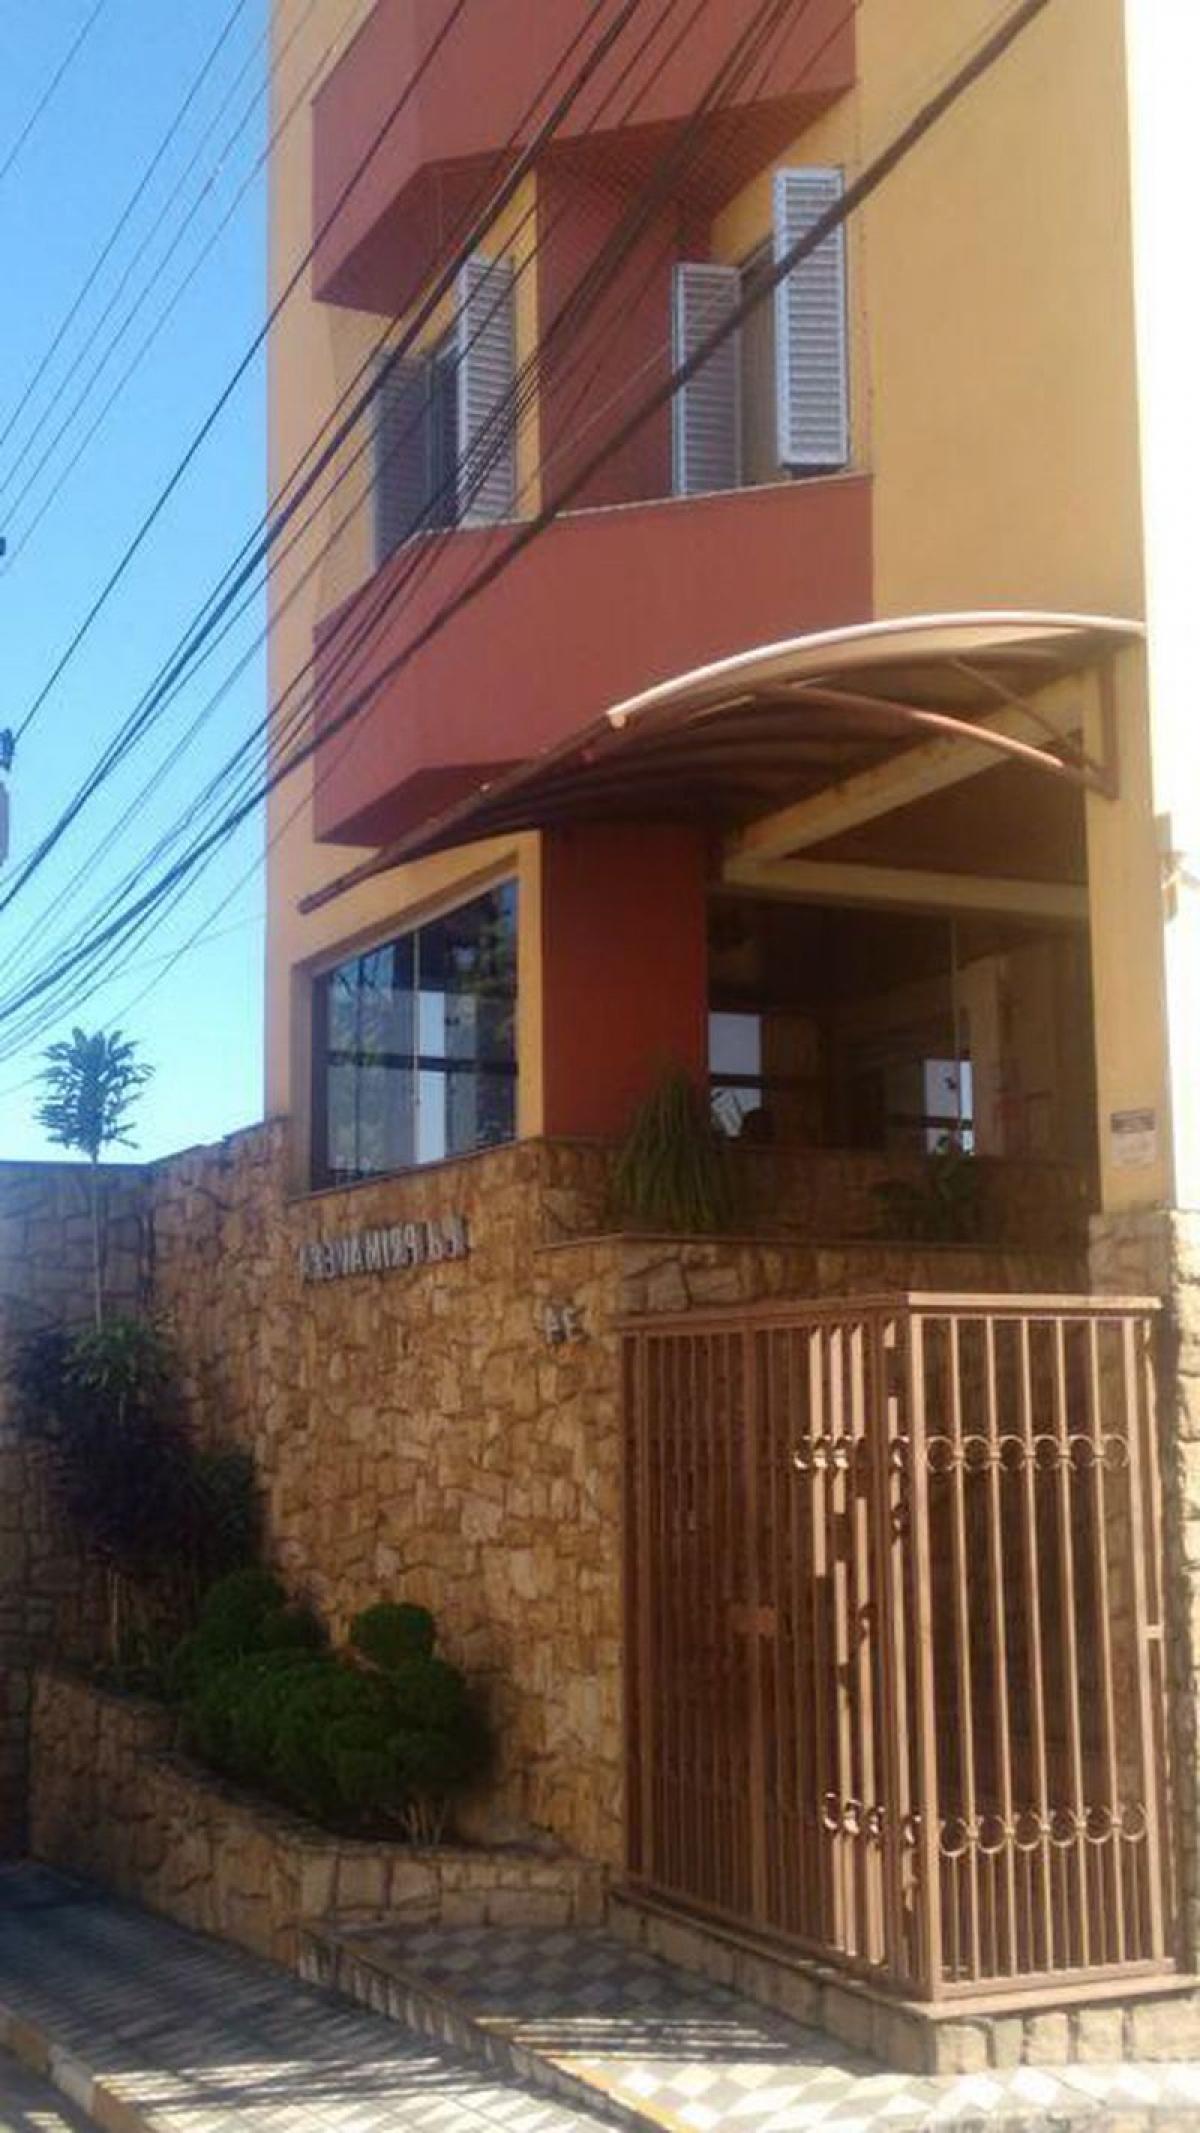 Picture of Apartment For Sale in Pouso Alegre, Minas Gerais, Brazil